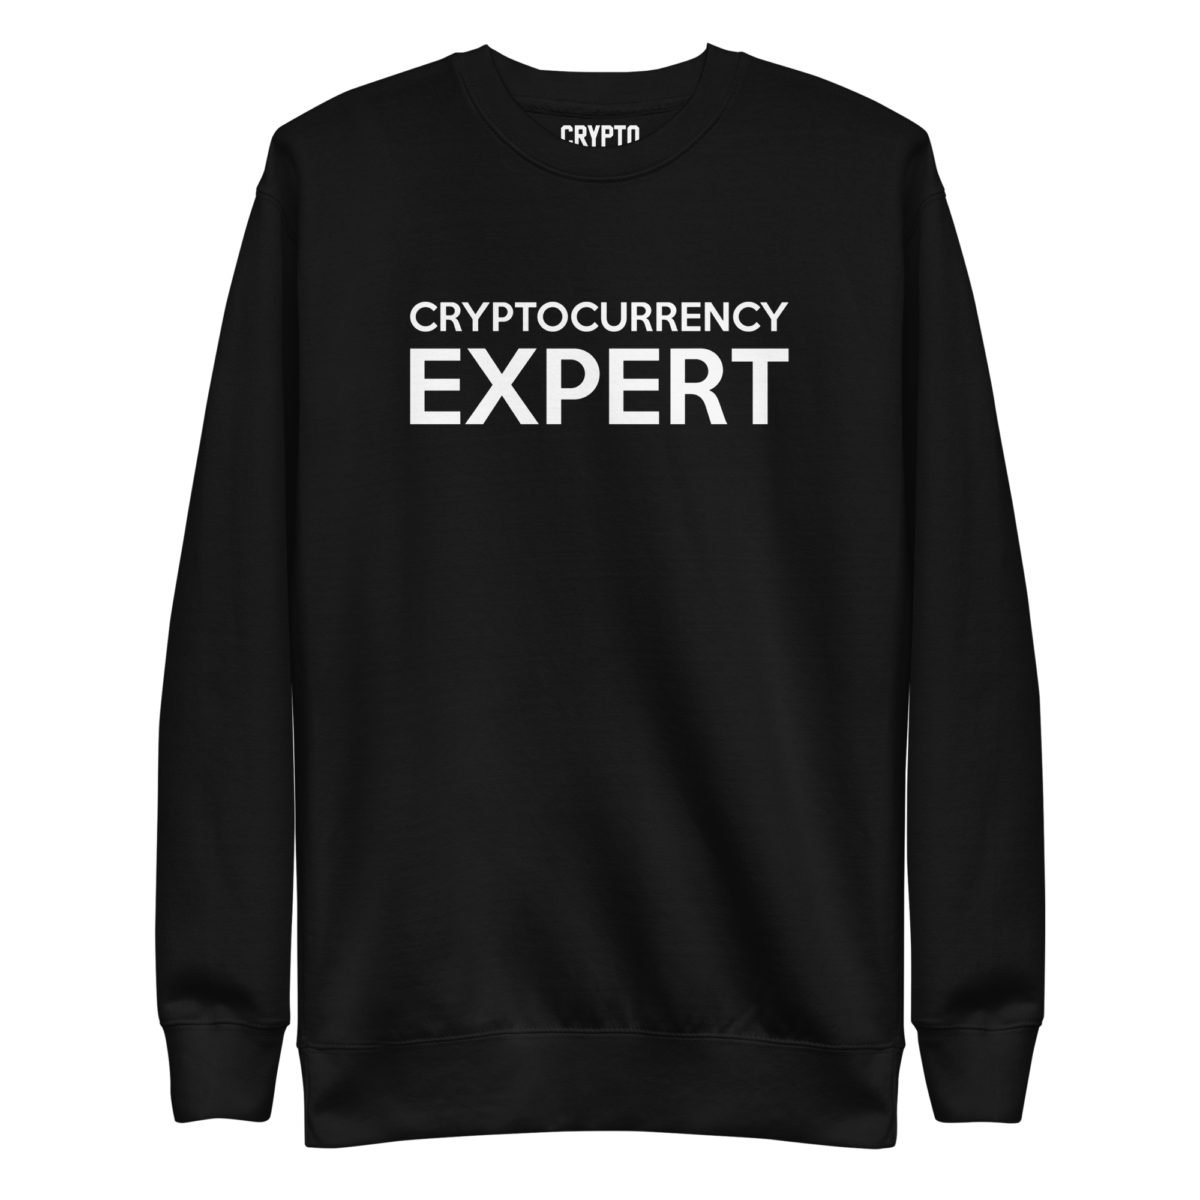 unisex premium sweatshirt black front 632c2b2a77b2d - Cryptocurrency Expert Sweatshirt